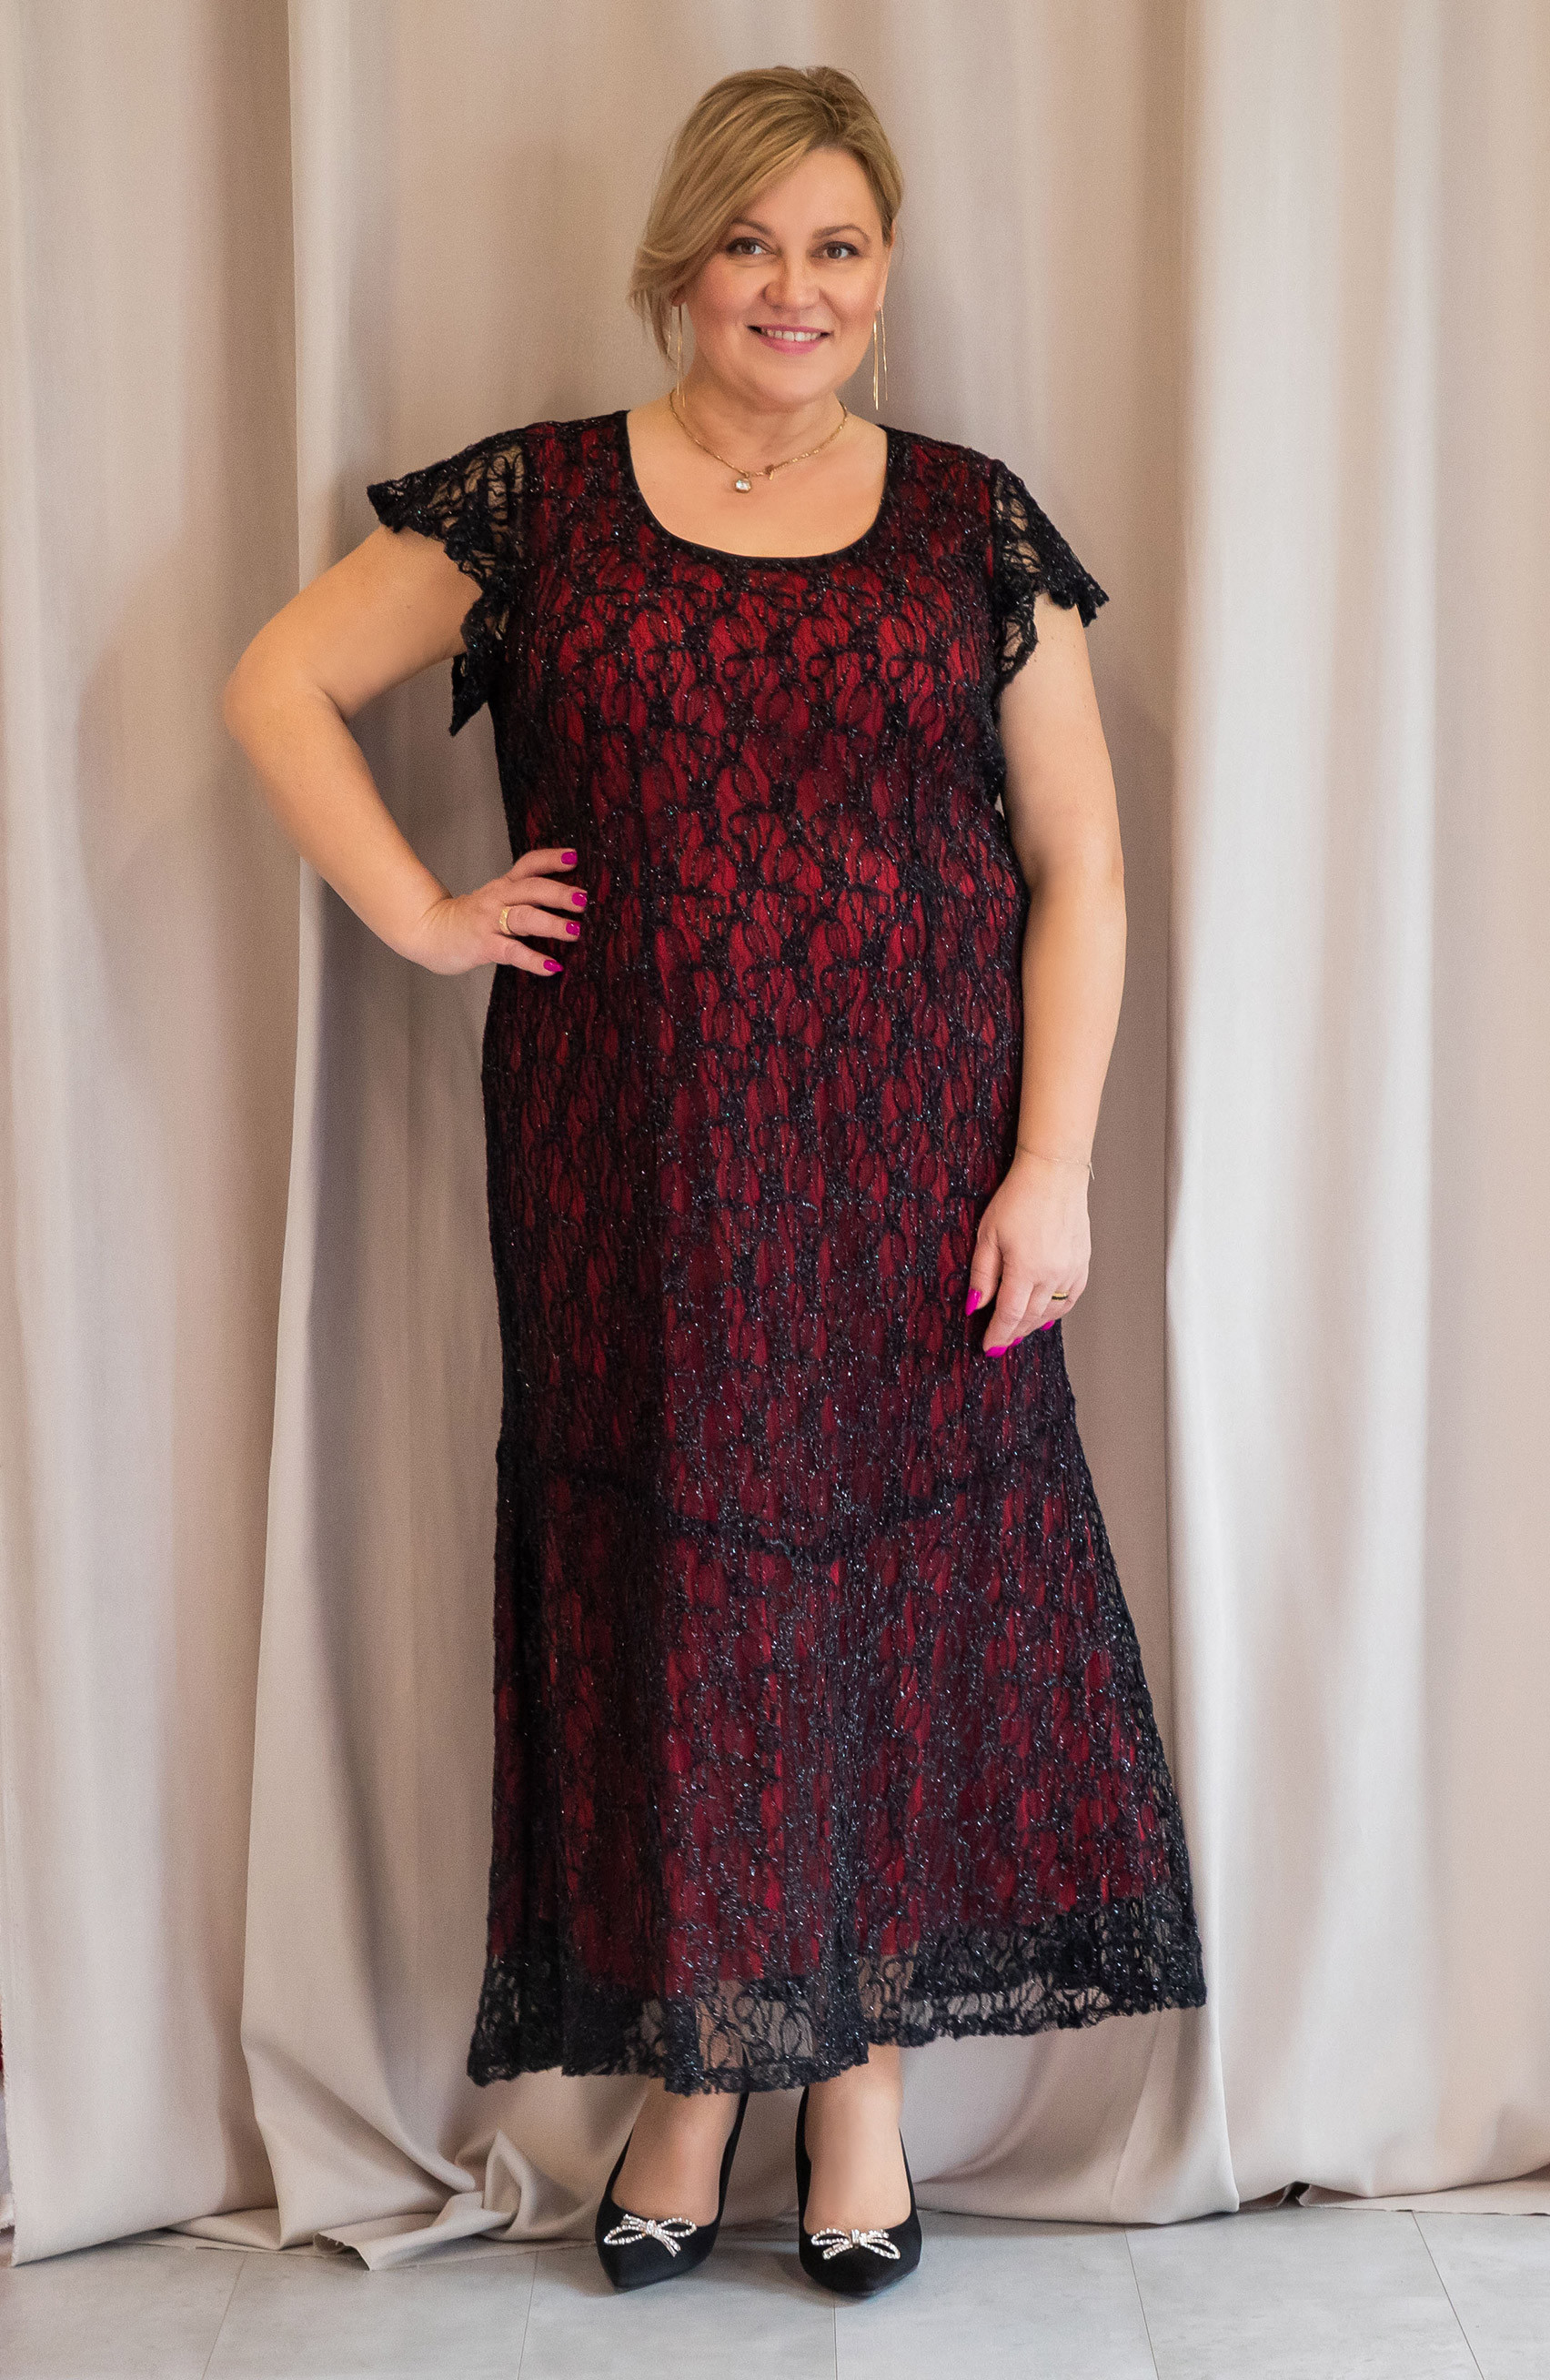 Dlhé čierne čipkované šaty s červenou podšívkou - pre plnoštíhle na svadbu | Fashion Large Sizes